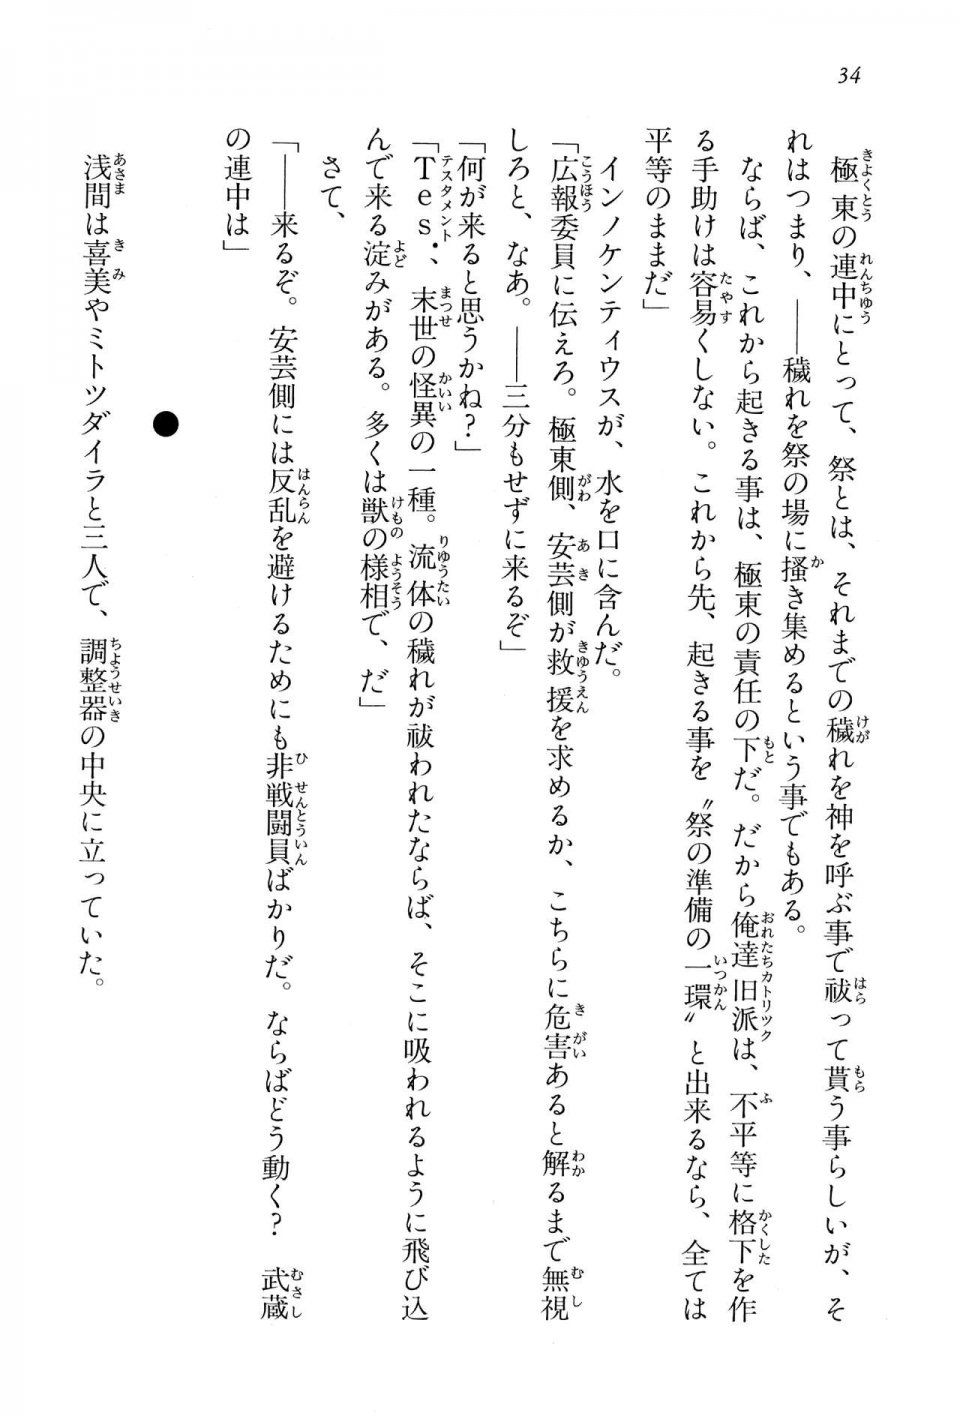 Kyoukai Senjou no Horizon BD Special Mininovel Vol 1(1A) - Photo #38